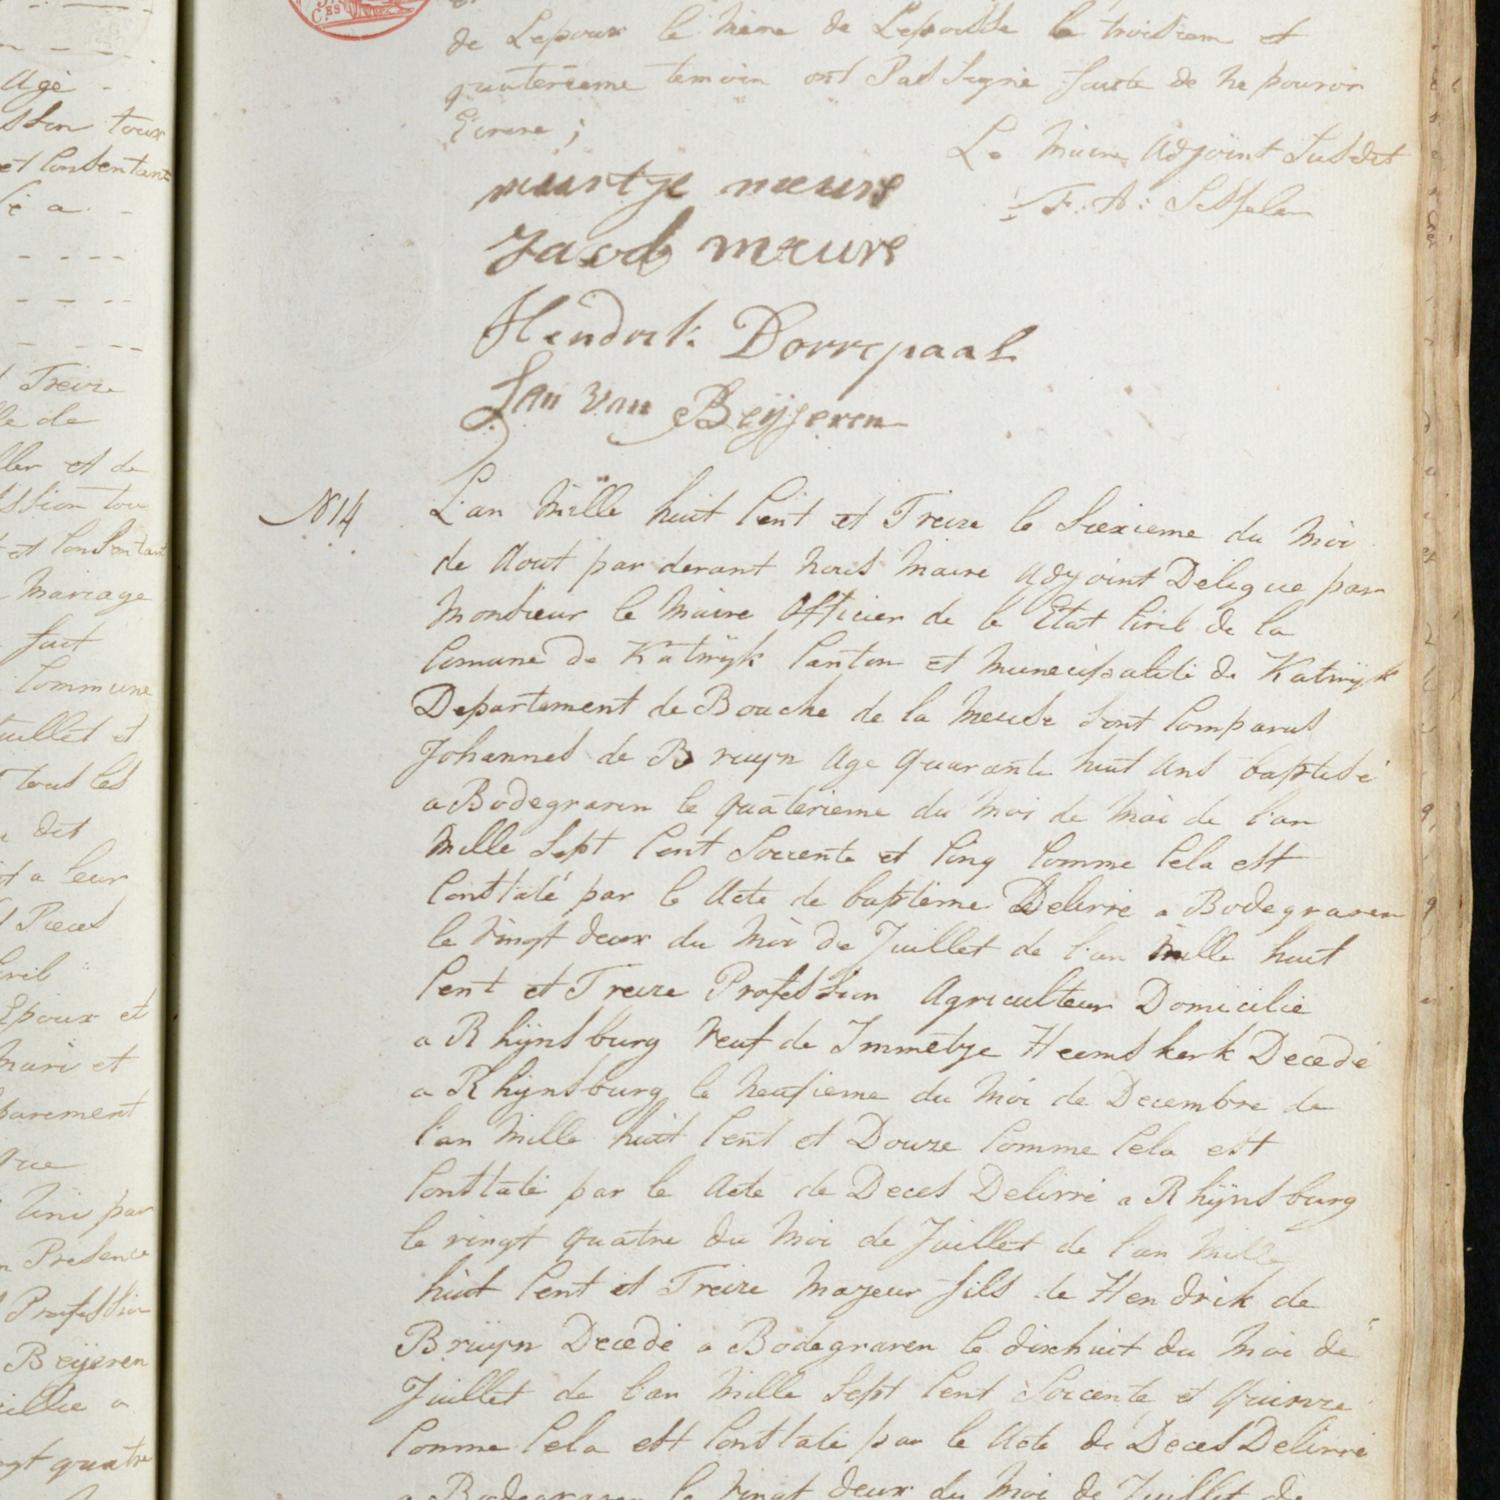 Civil registry of marriages, Katwijk, 1813, records 13-14